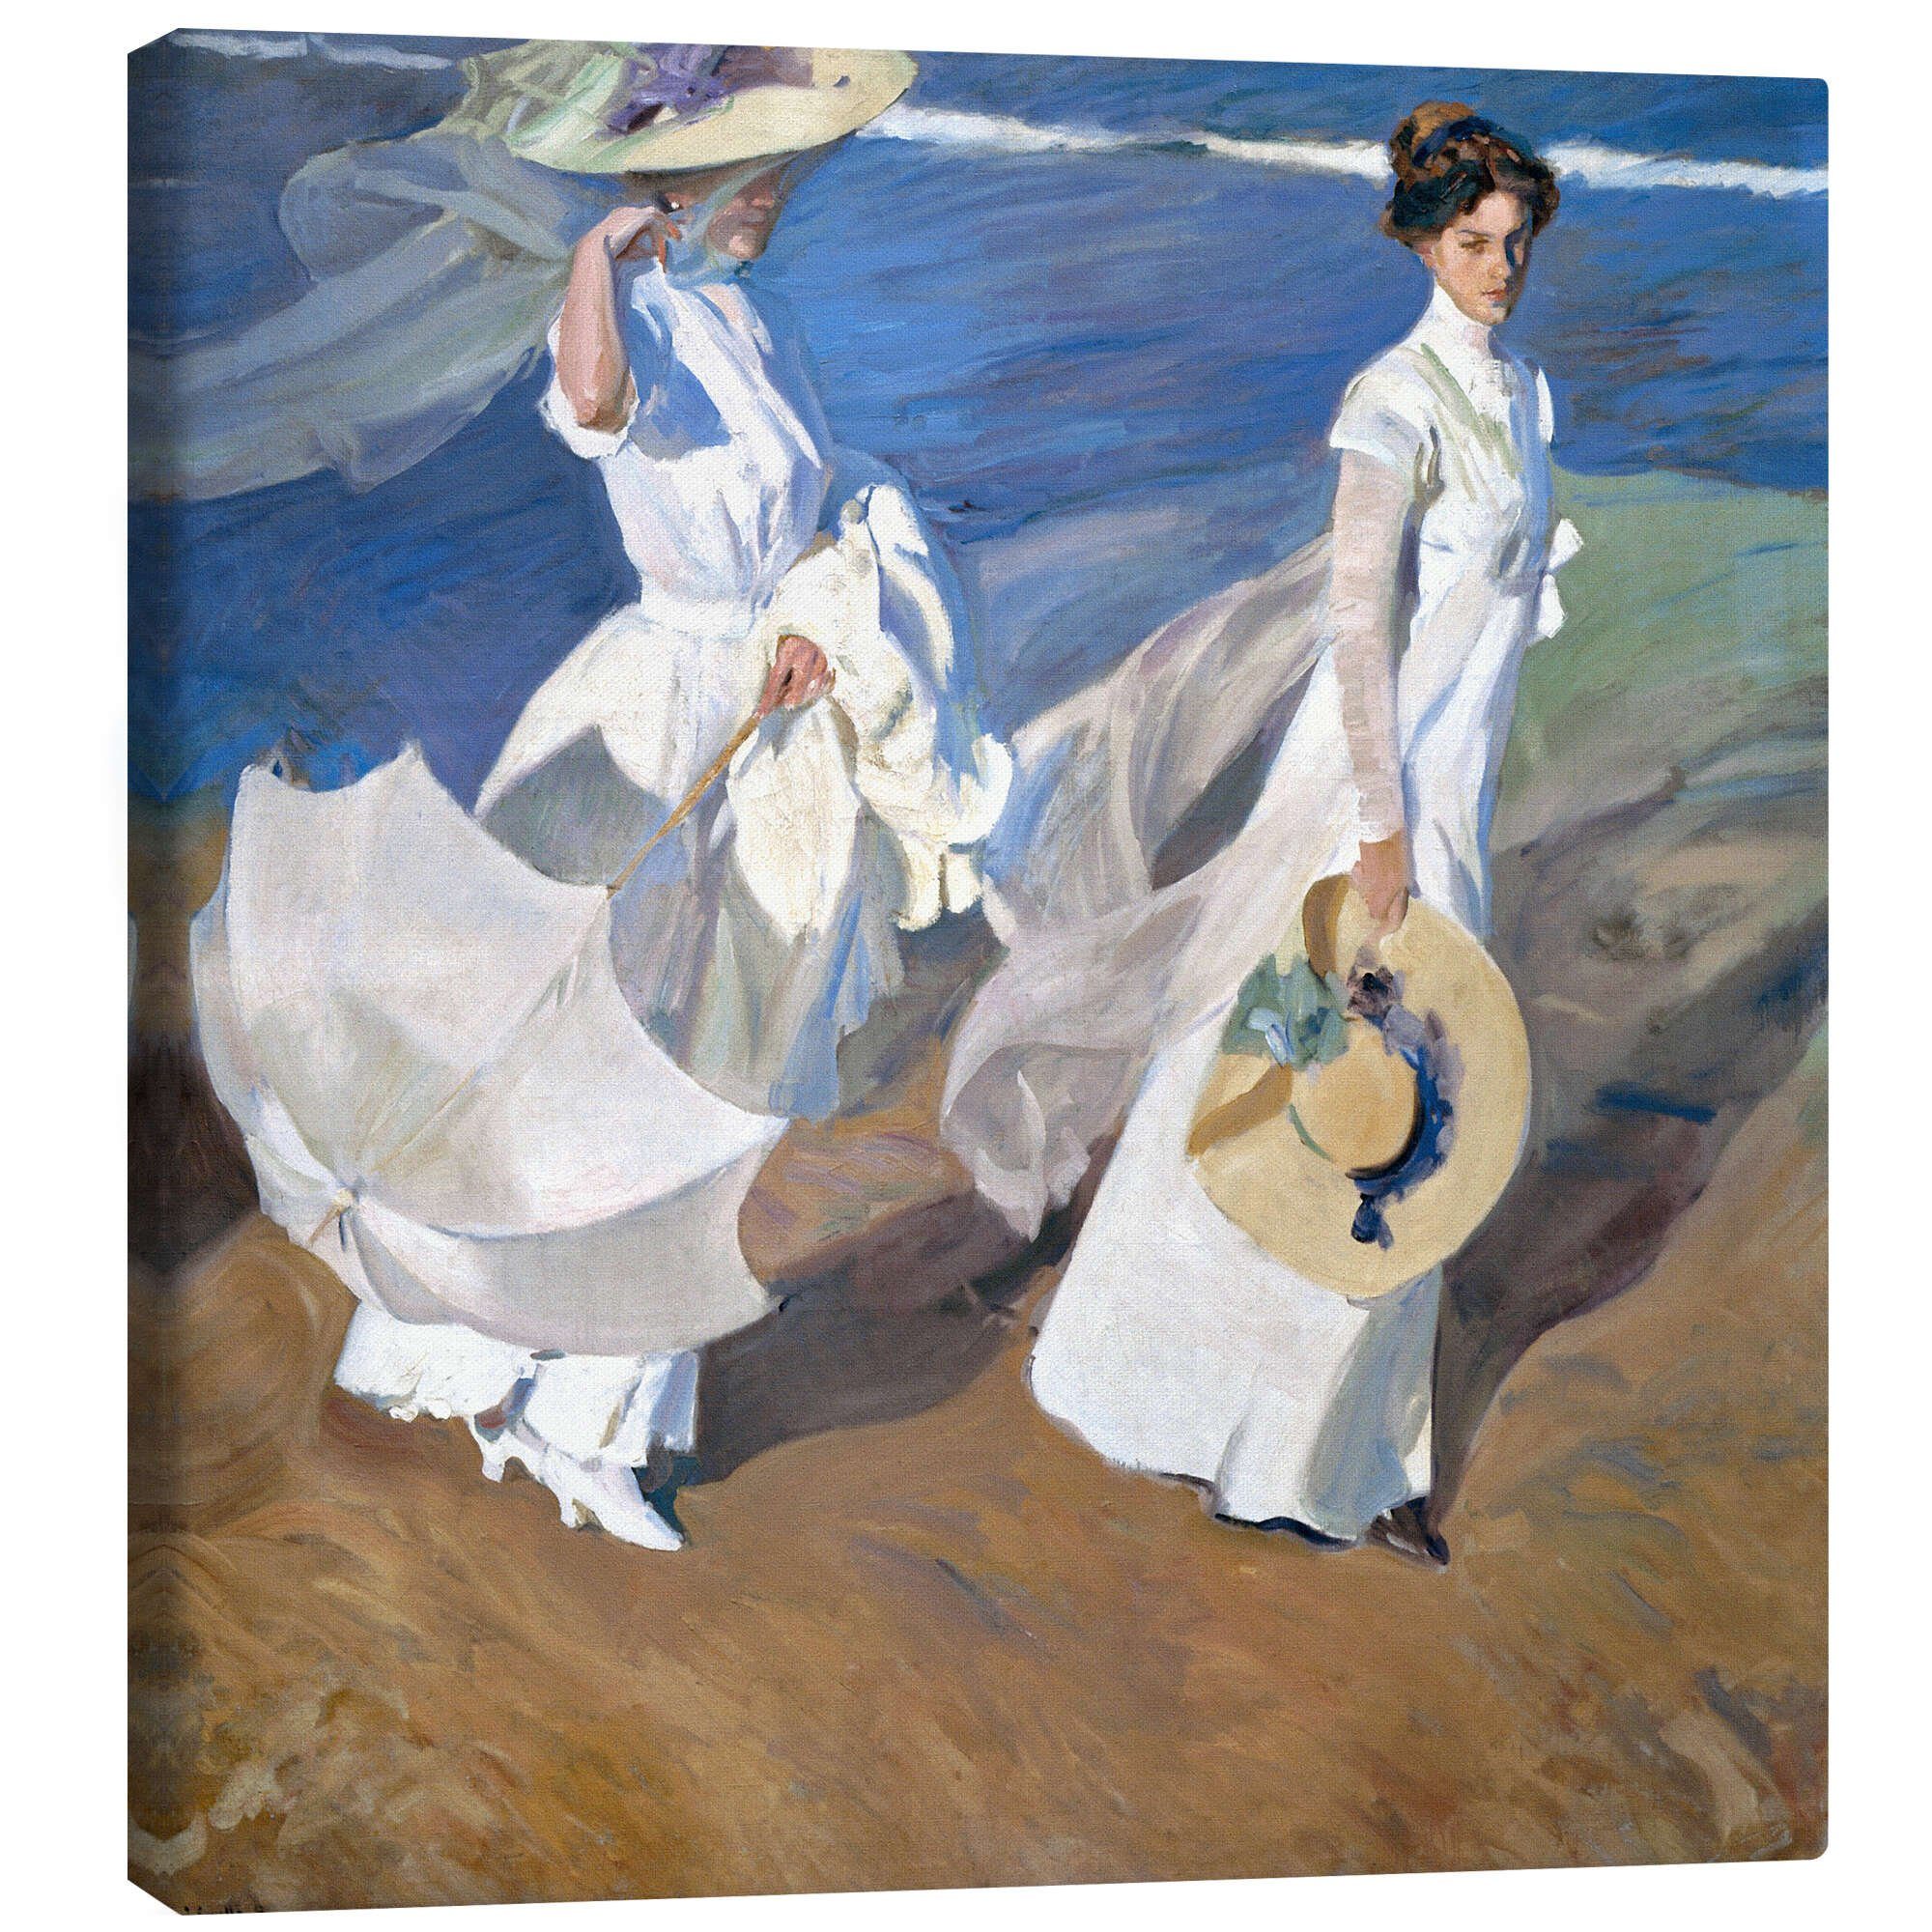 Posterlounge Leinwandbild Joaquín Sorolla y Bastida, Spaziergang entlang der Küste, 1909, Wohnzimmer Maritim Malerei